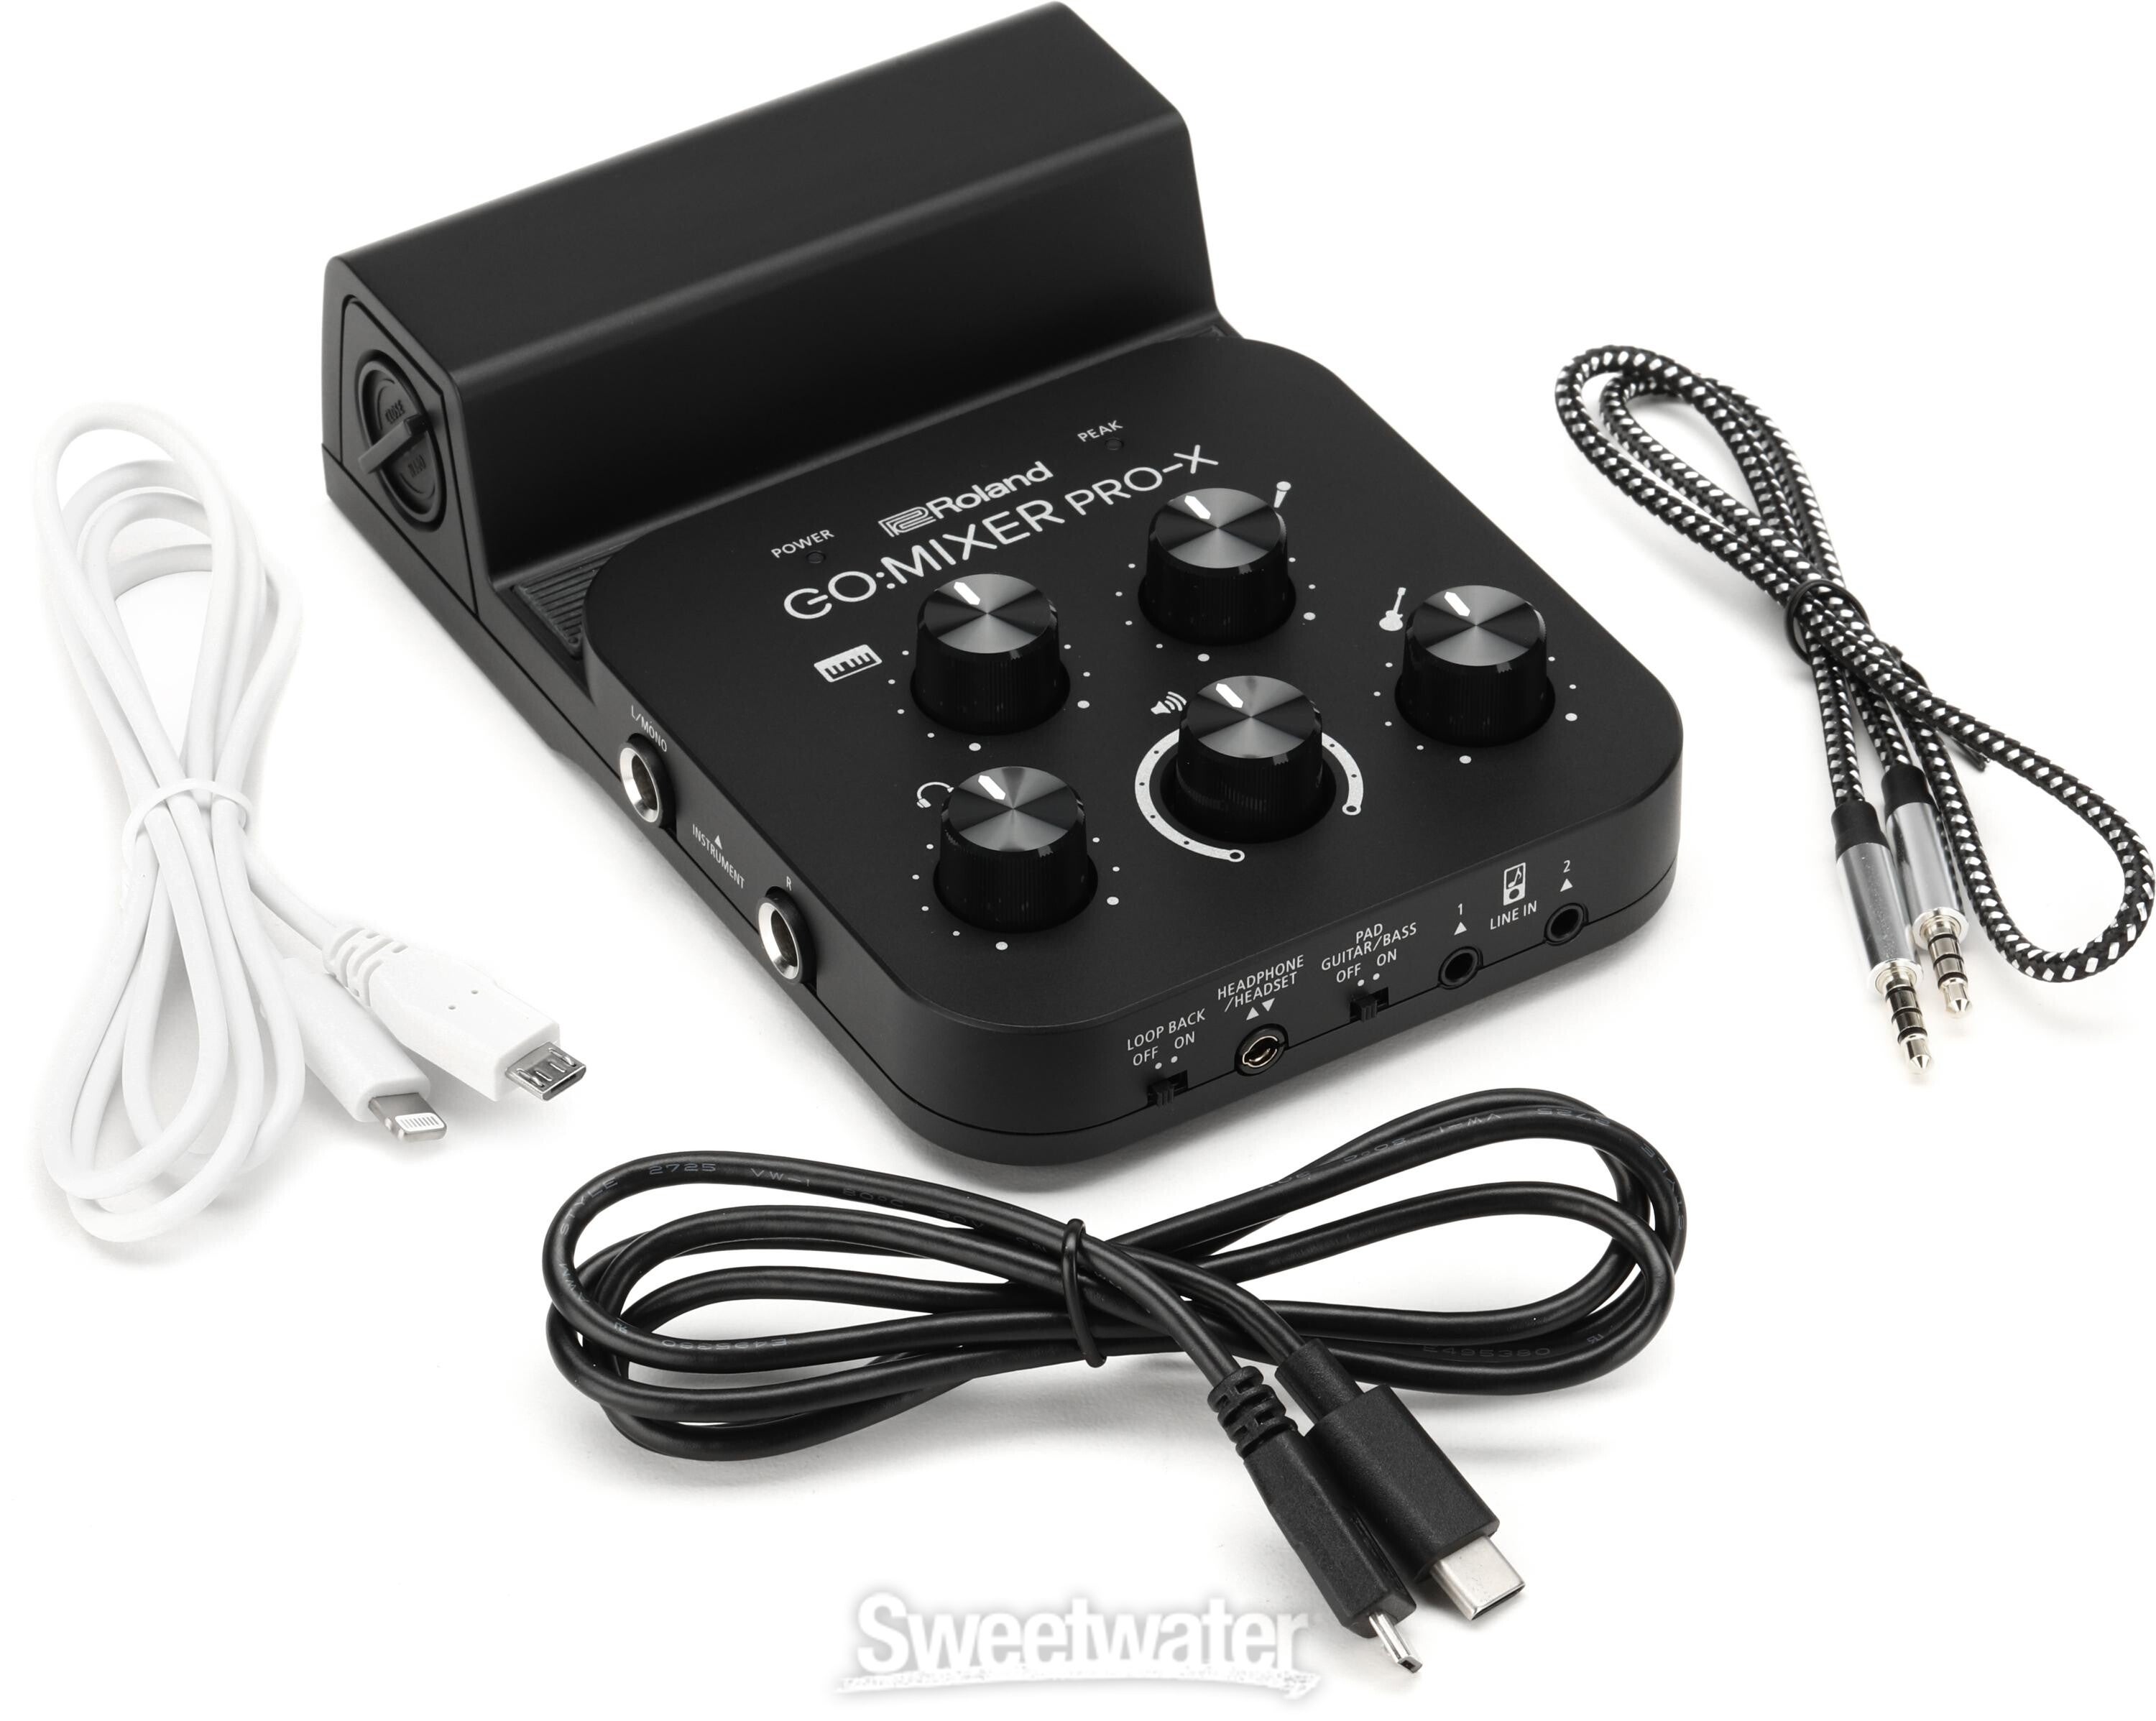 Roland GO:MIXER PRO-X Audio Mixer for Smartphones | Sweetwater